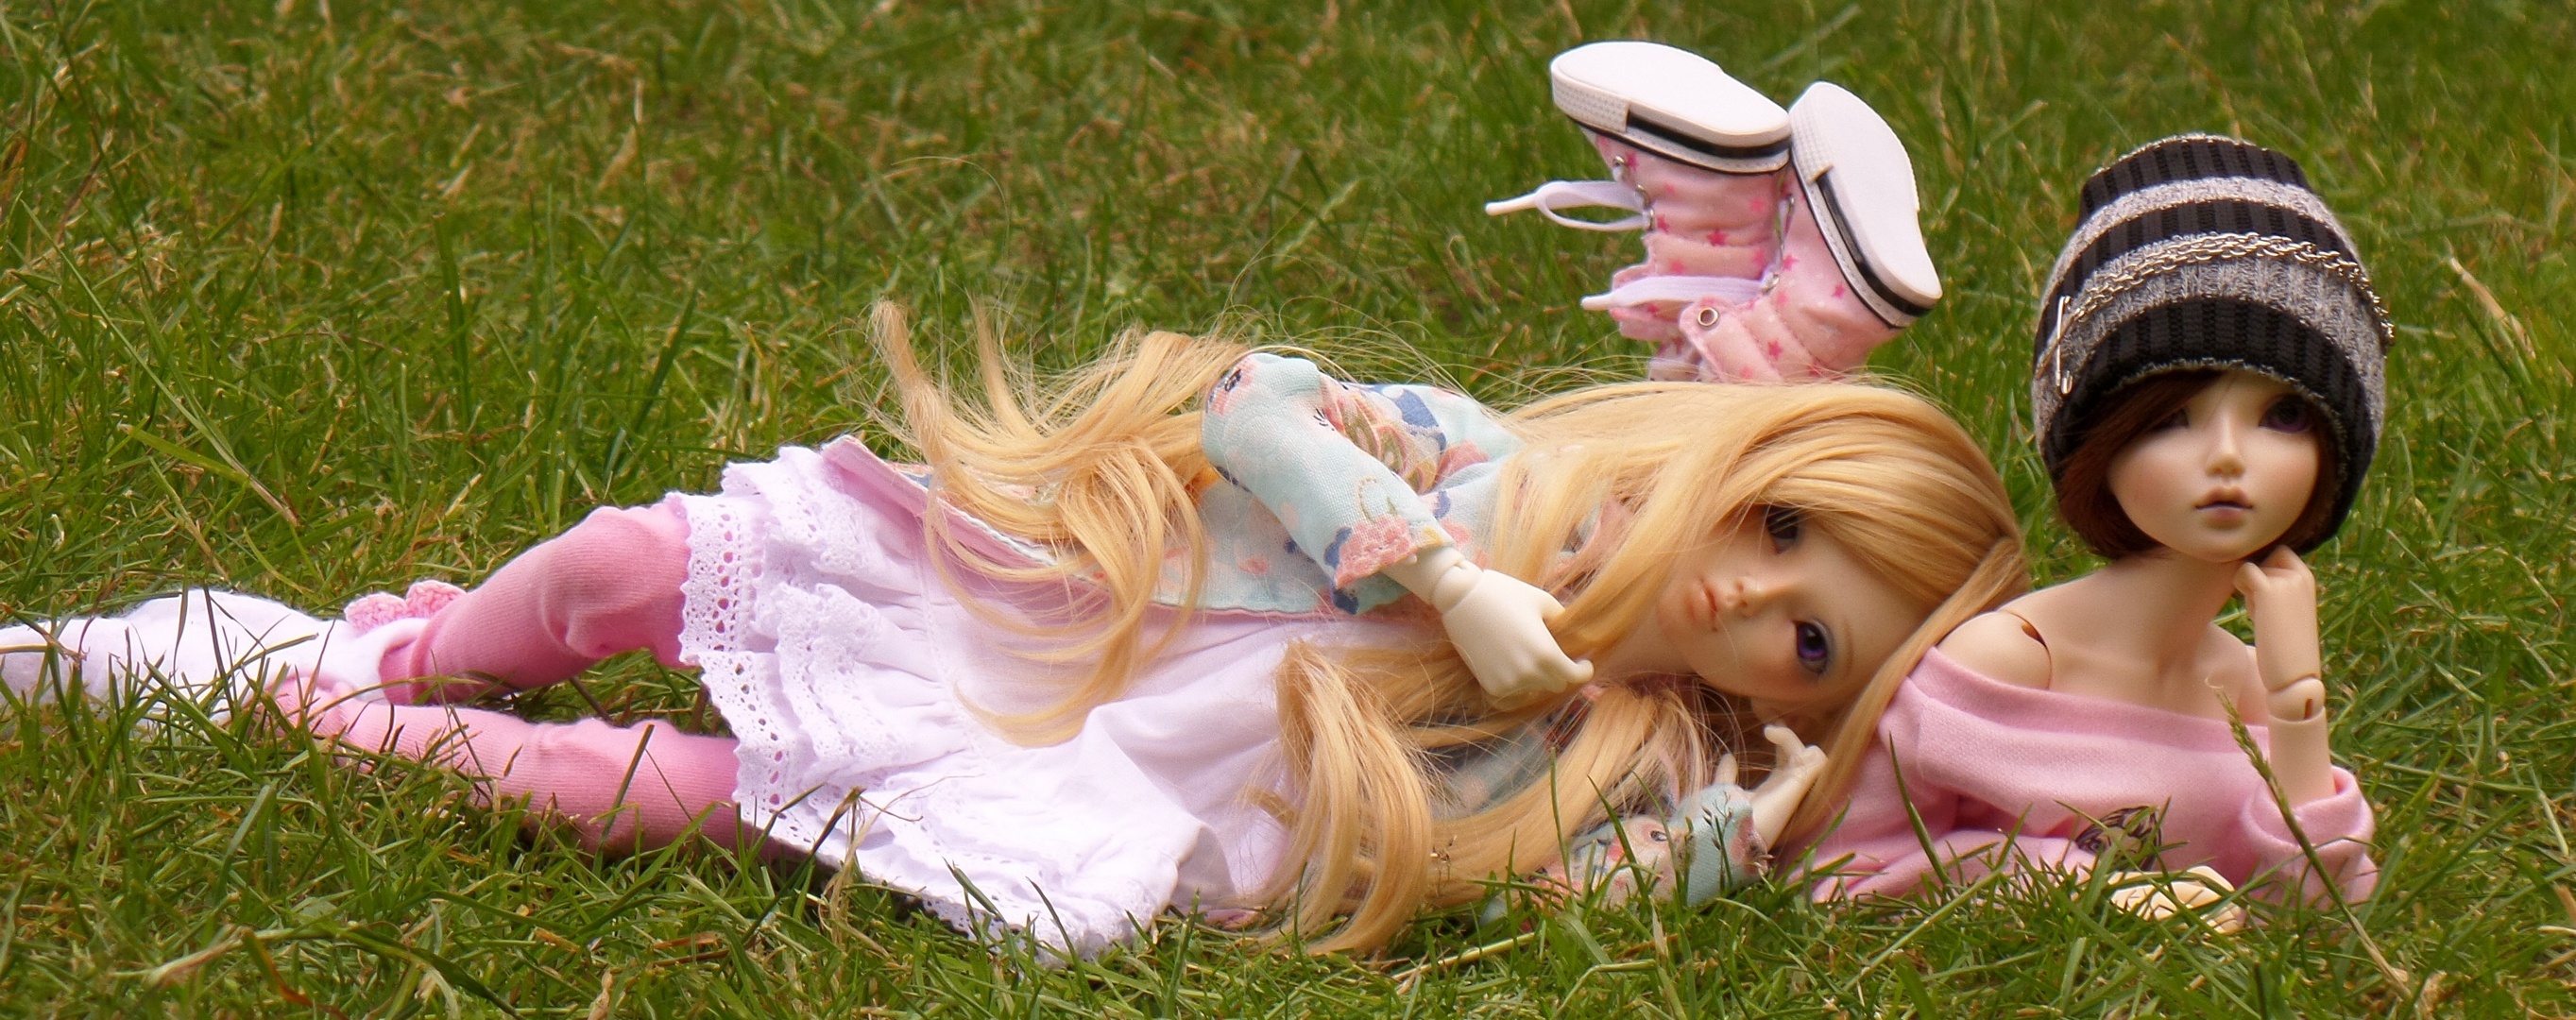 110992-dolls-toys-doll-toy-girl-girls-bokeh-mood-multi-dual.jpg